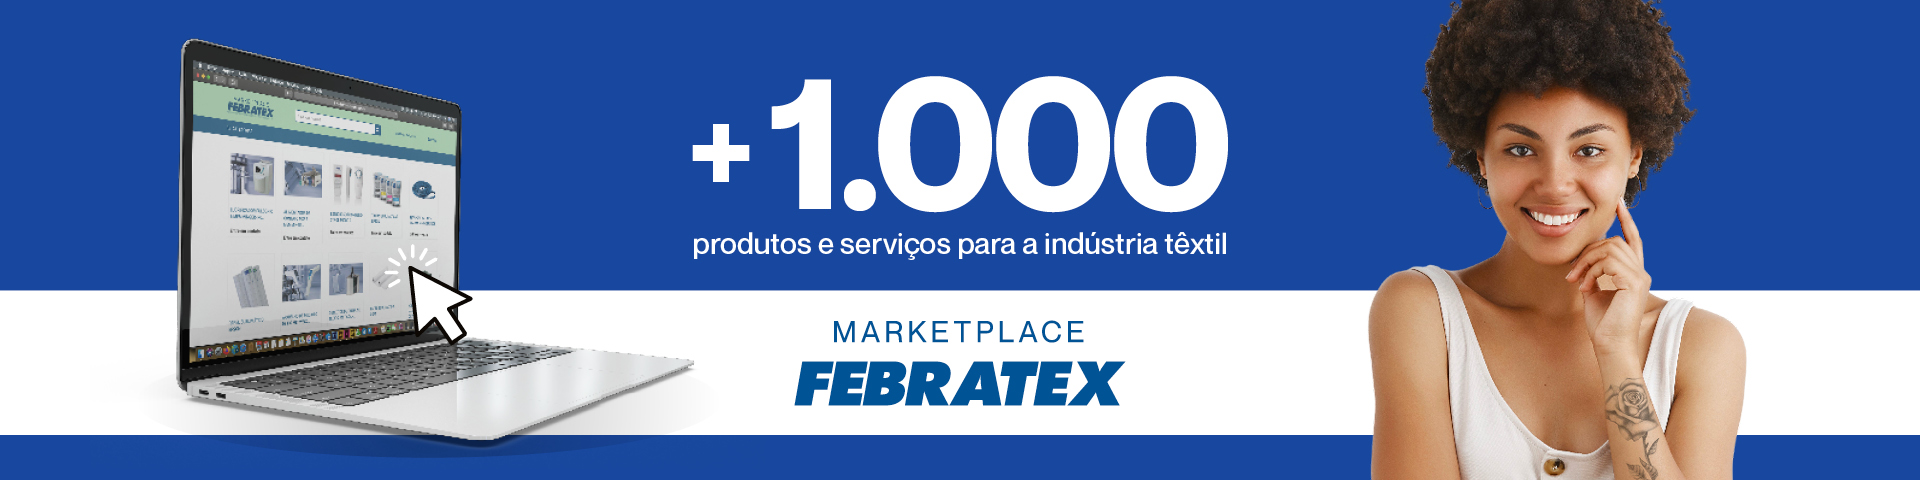 febratex-marketplace-banner-home